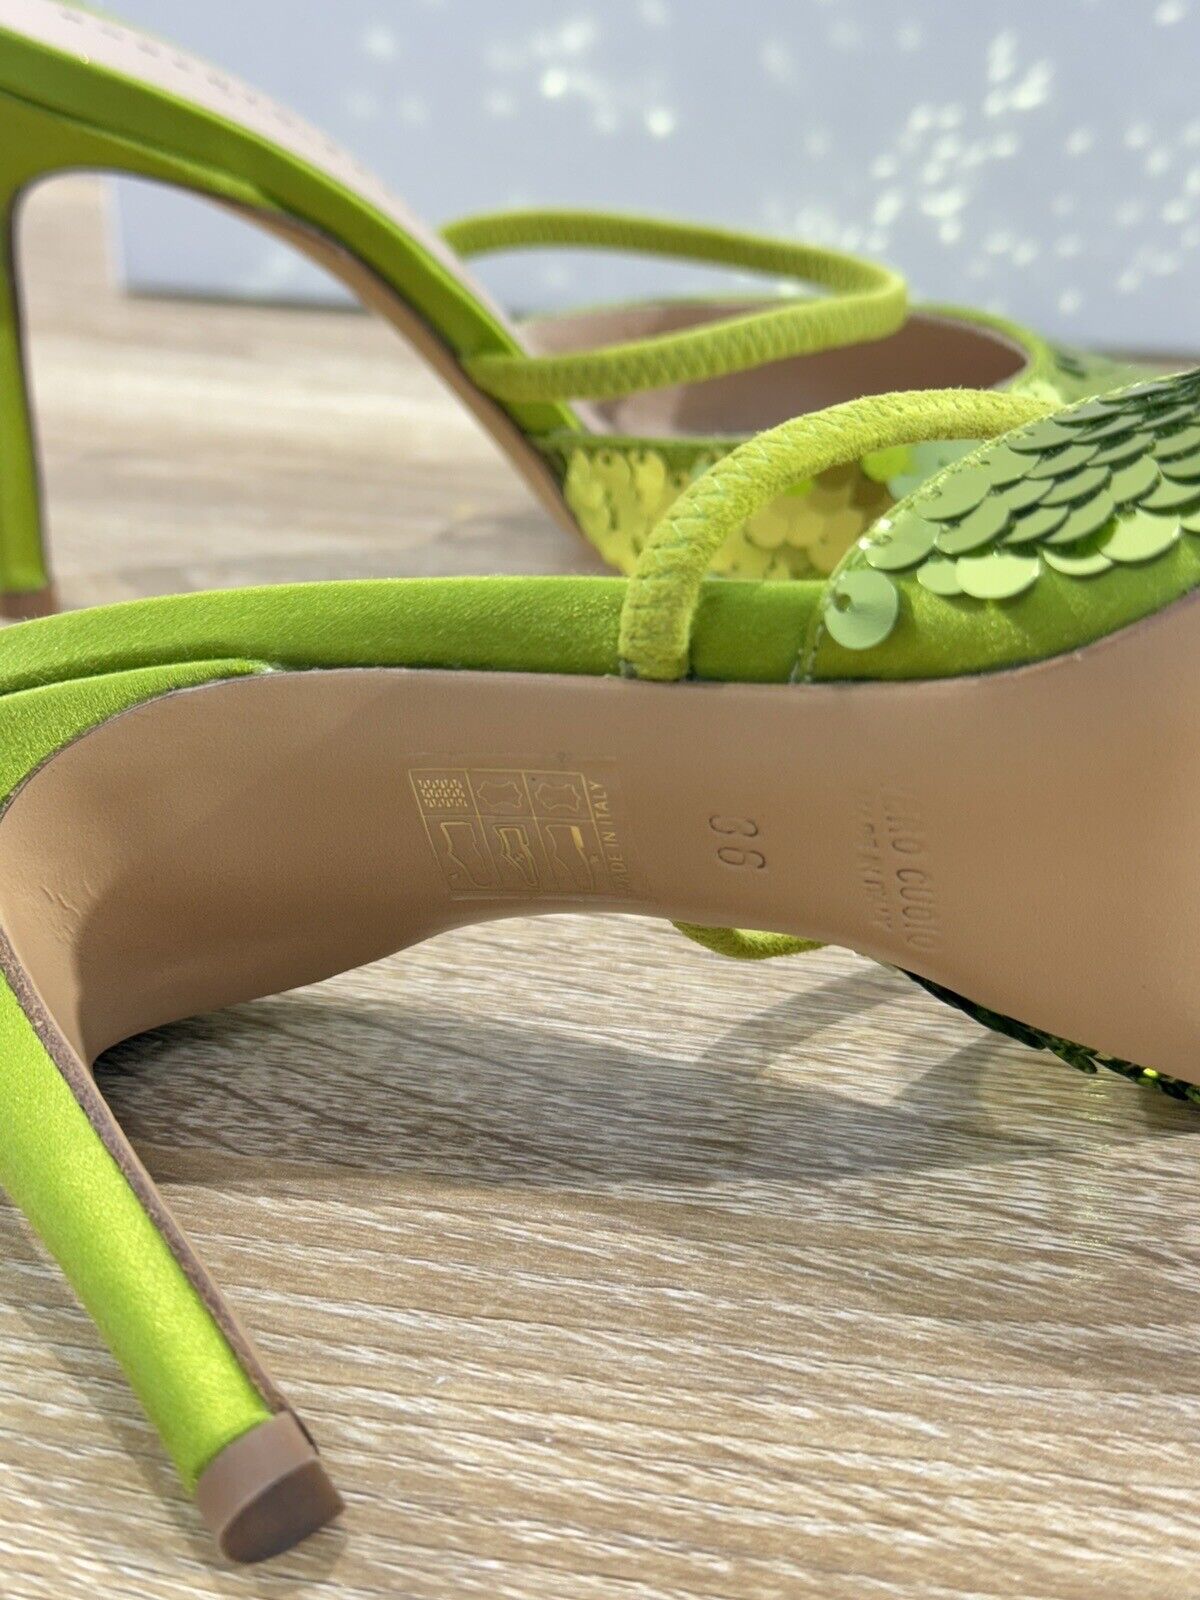 Roberto Festa Milano Scarpa Donna Podik  Raso Verde   Luxury Shoes 36